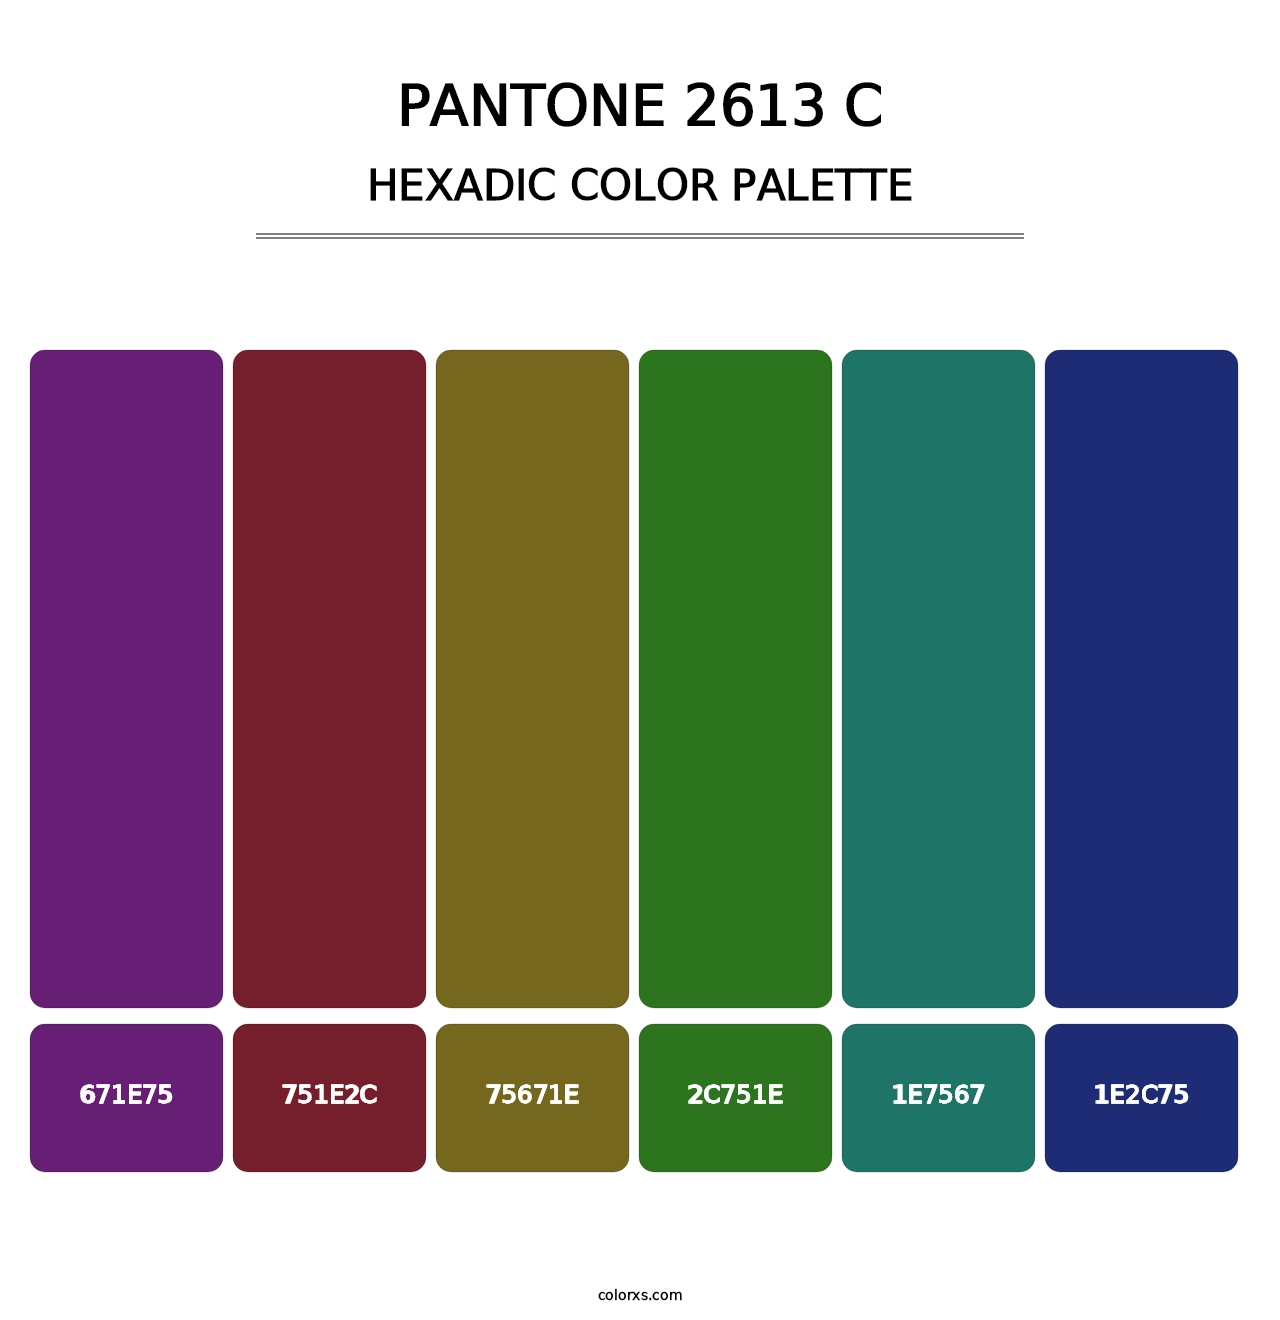 PANTONE 2613 C - Hexadic Color Palette